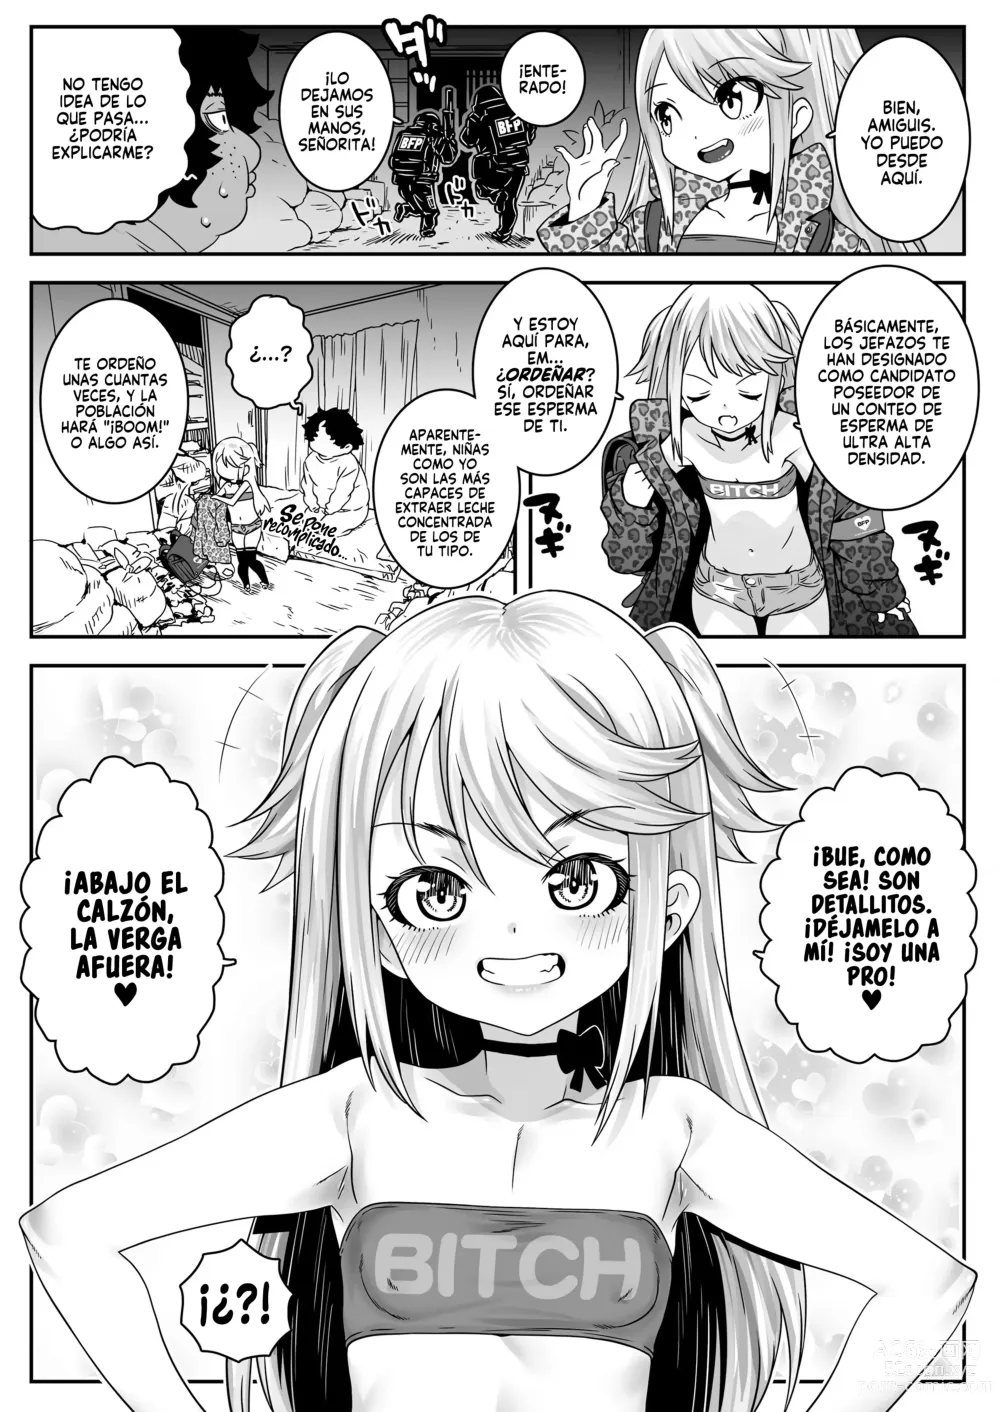 Page 3 of manga Bien Familiar Progresista